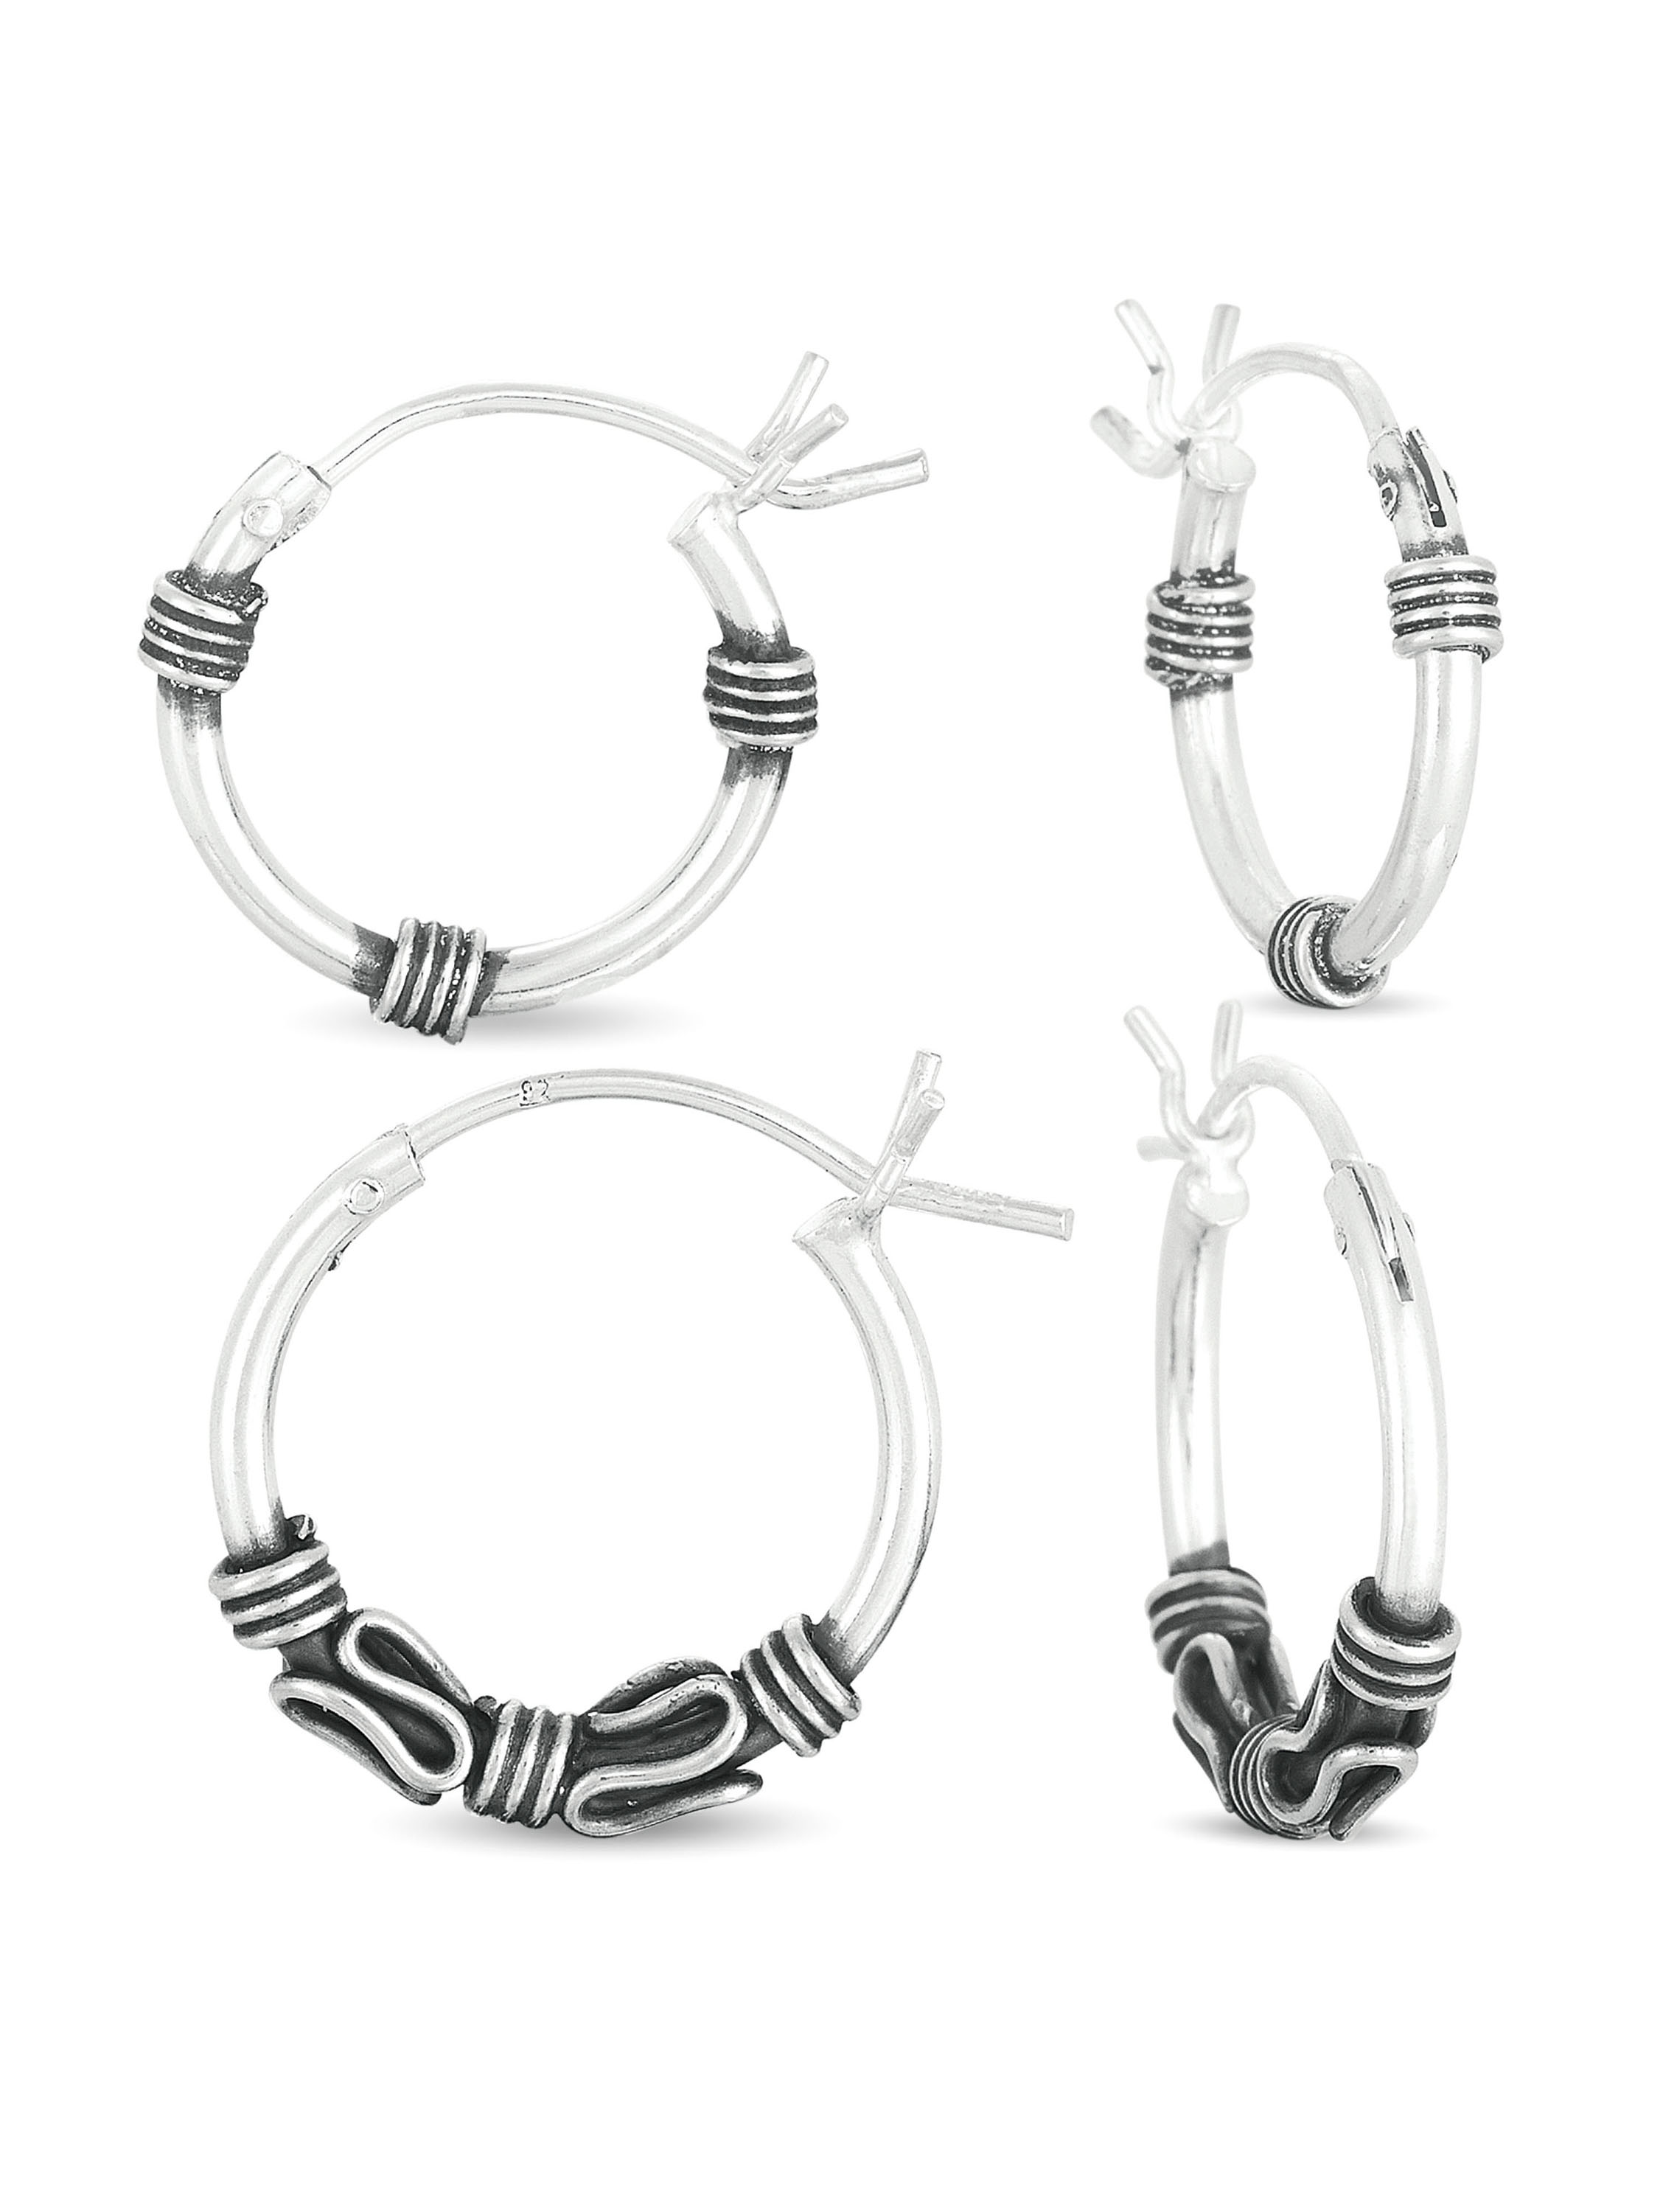 Body Jewelry Sterling Silver Bali Hoop Earrings Set - image 1 of 1